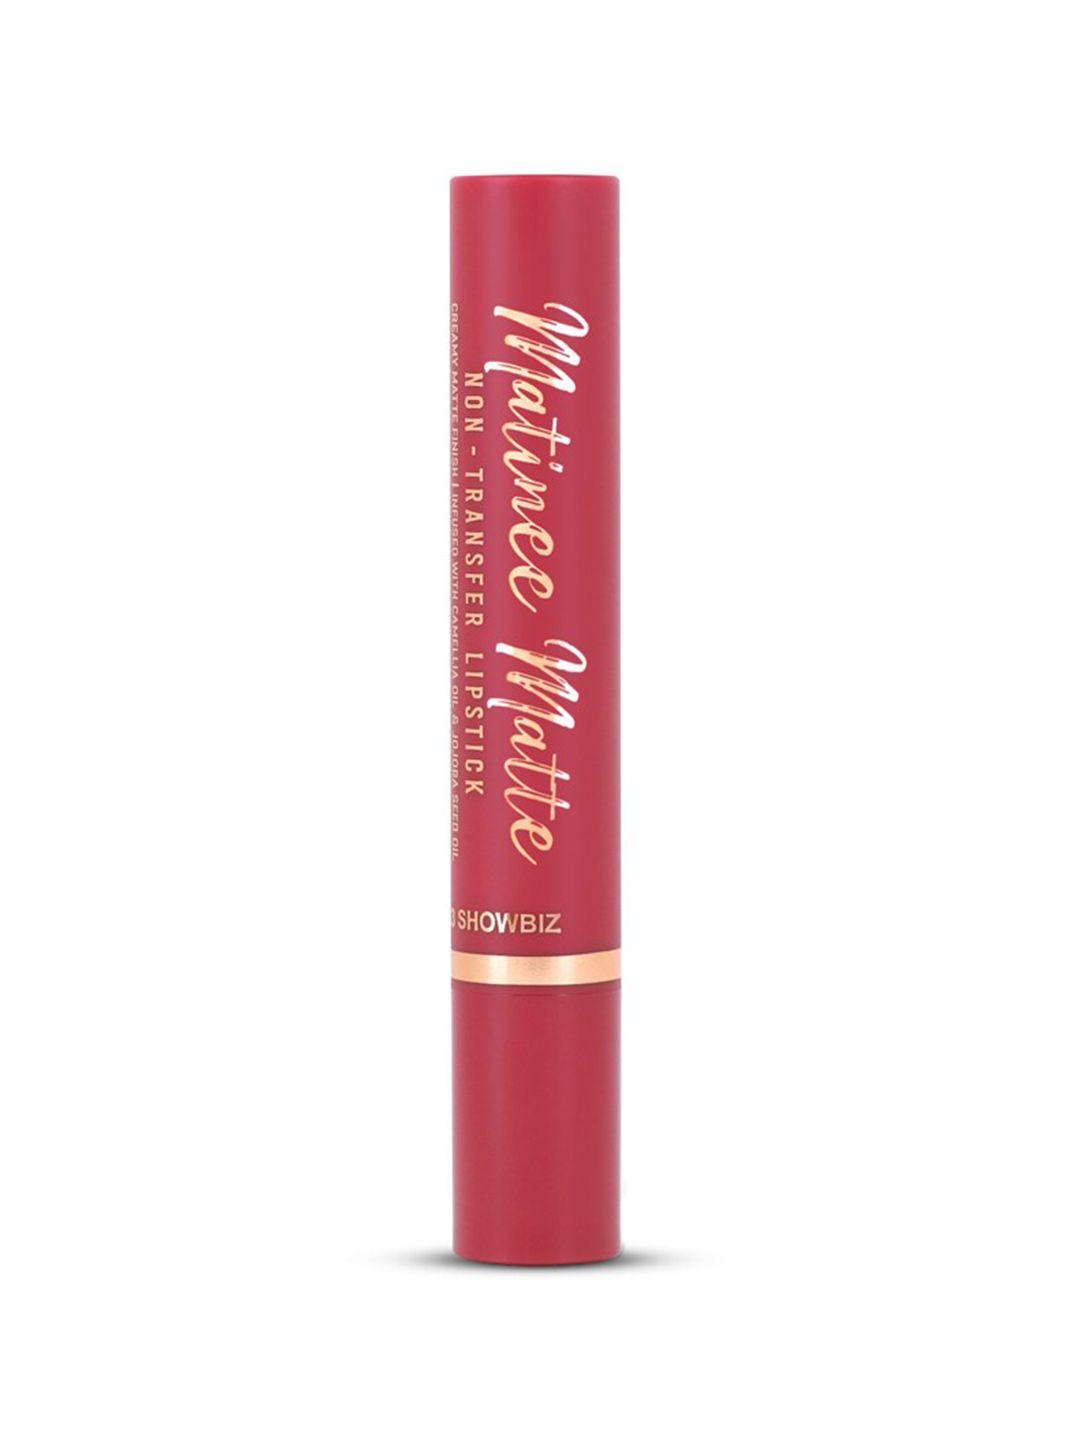 mattlook matinee matte non transfer lipstick with camellia oil - showbiz 13